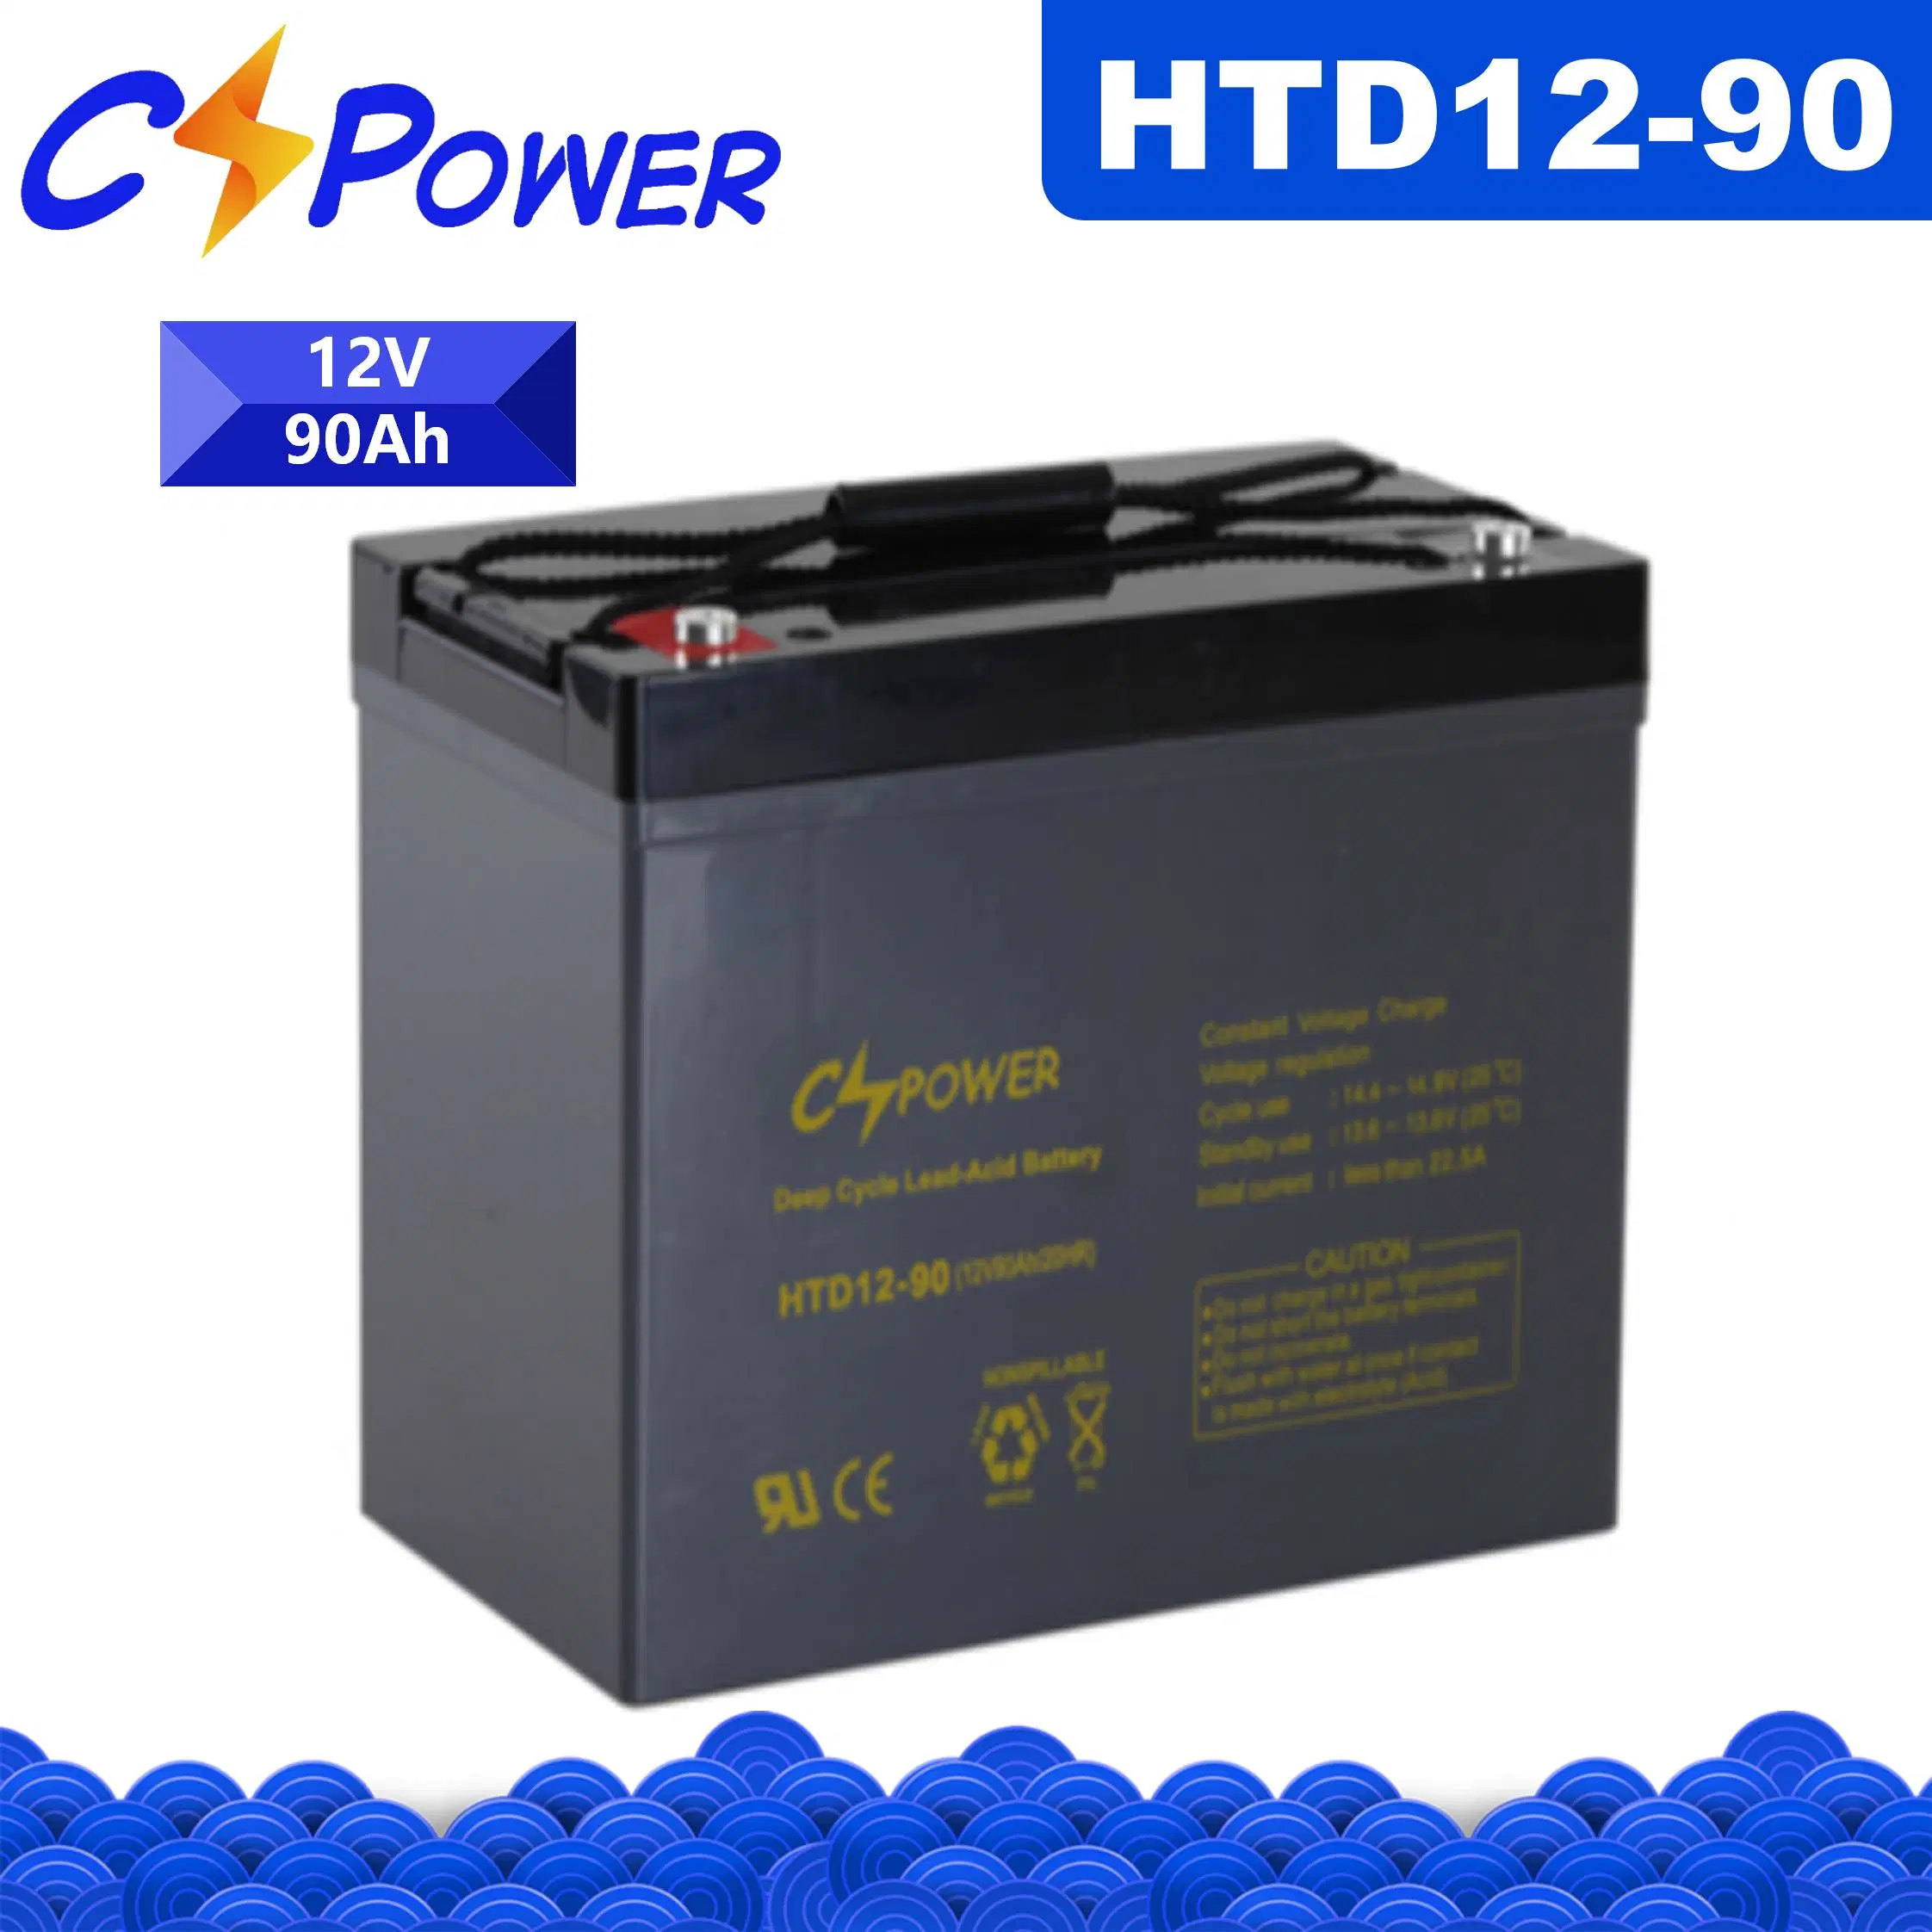 Cspower Battery Deep Cycle Long Life AGM Battery Inverter Solar/Sunny Storage Power Tool Vs Narada